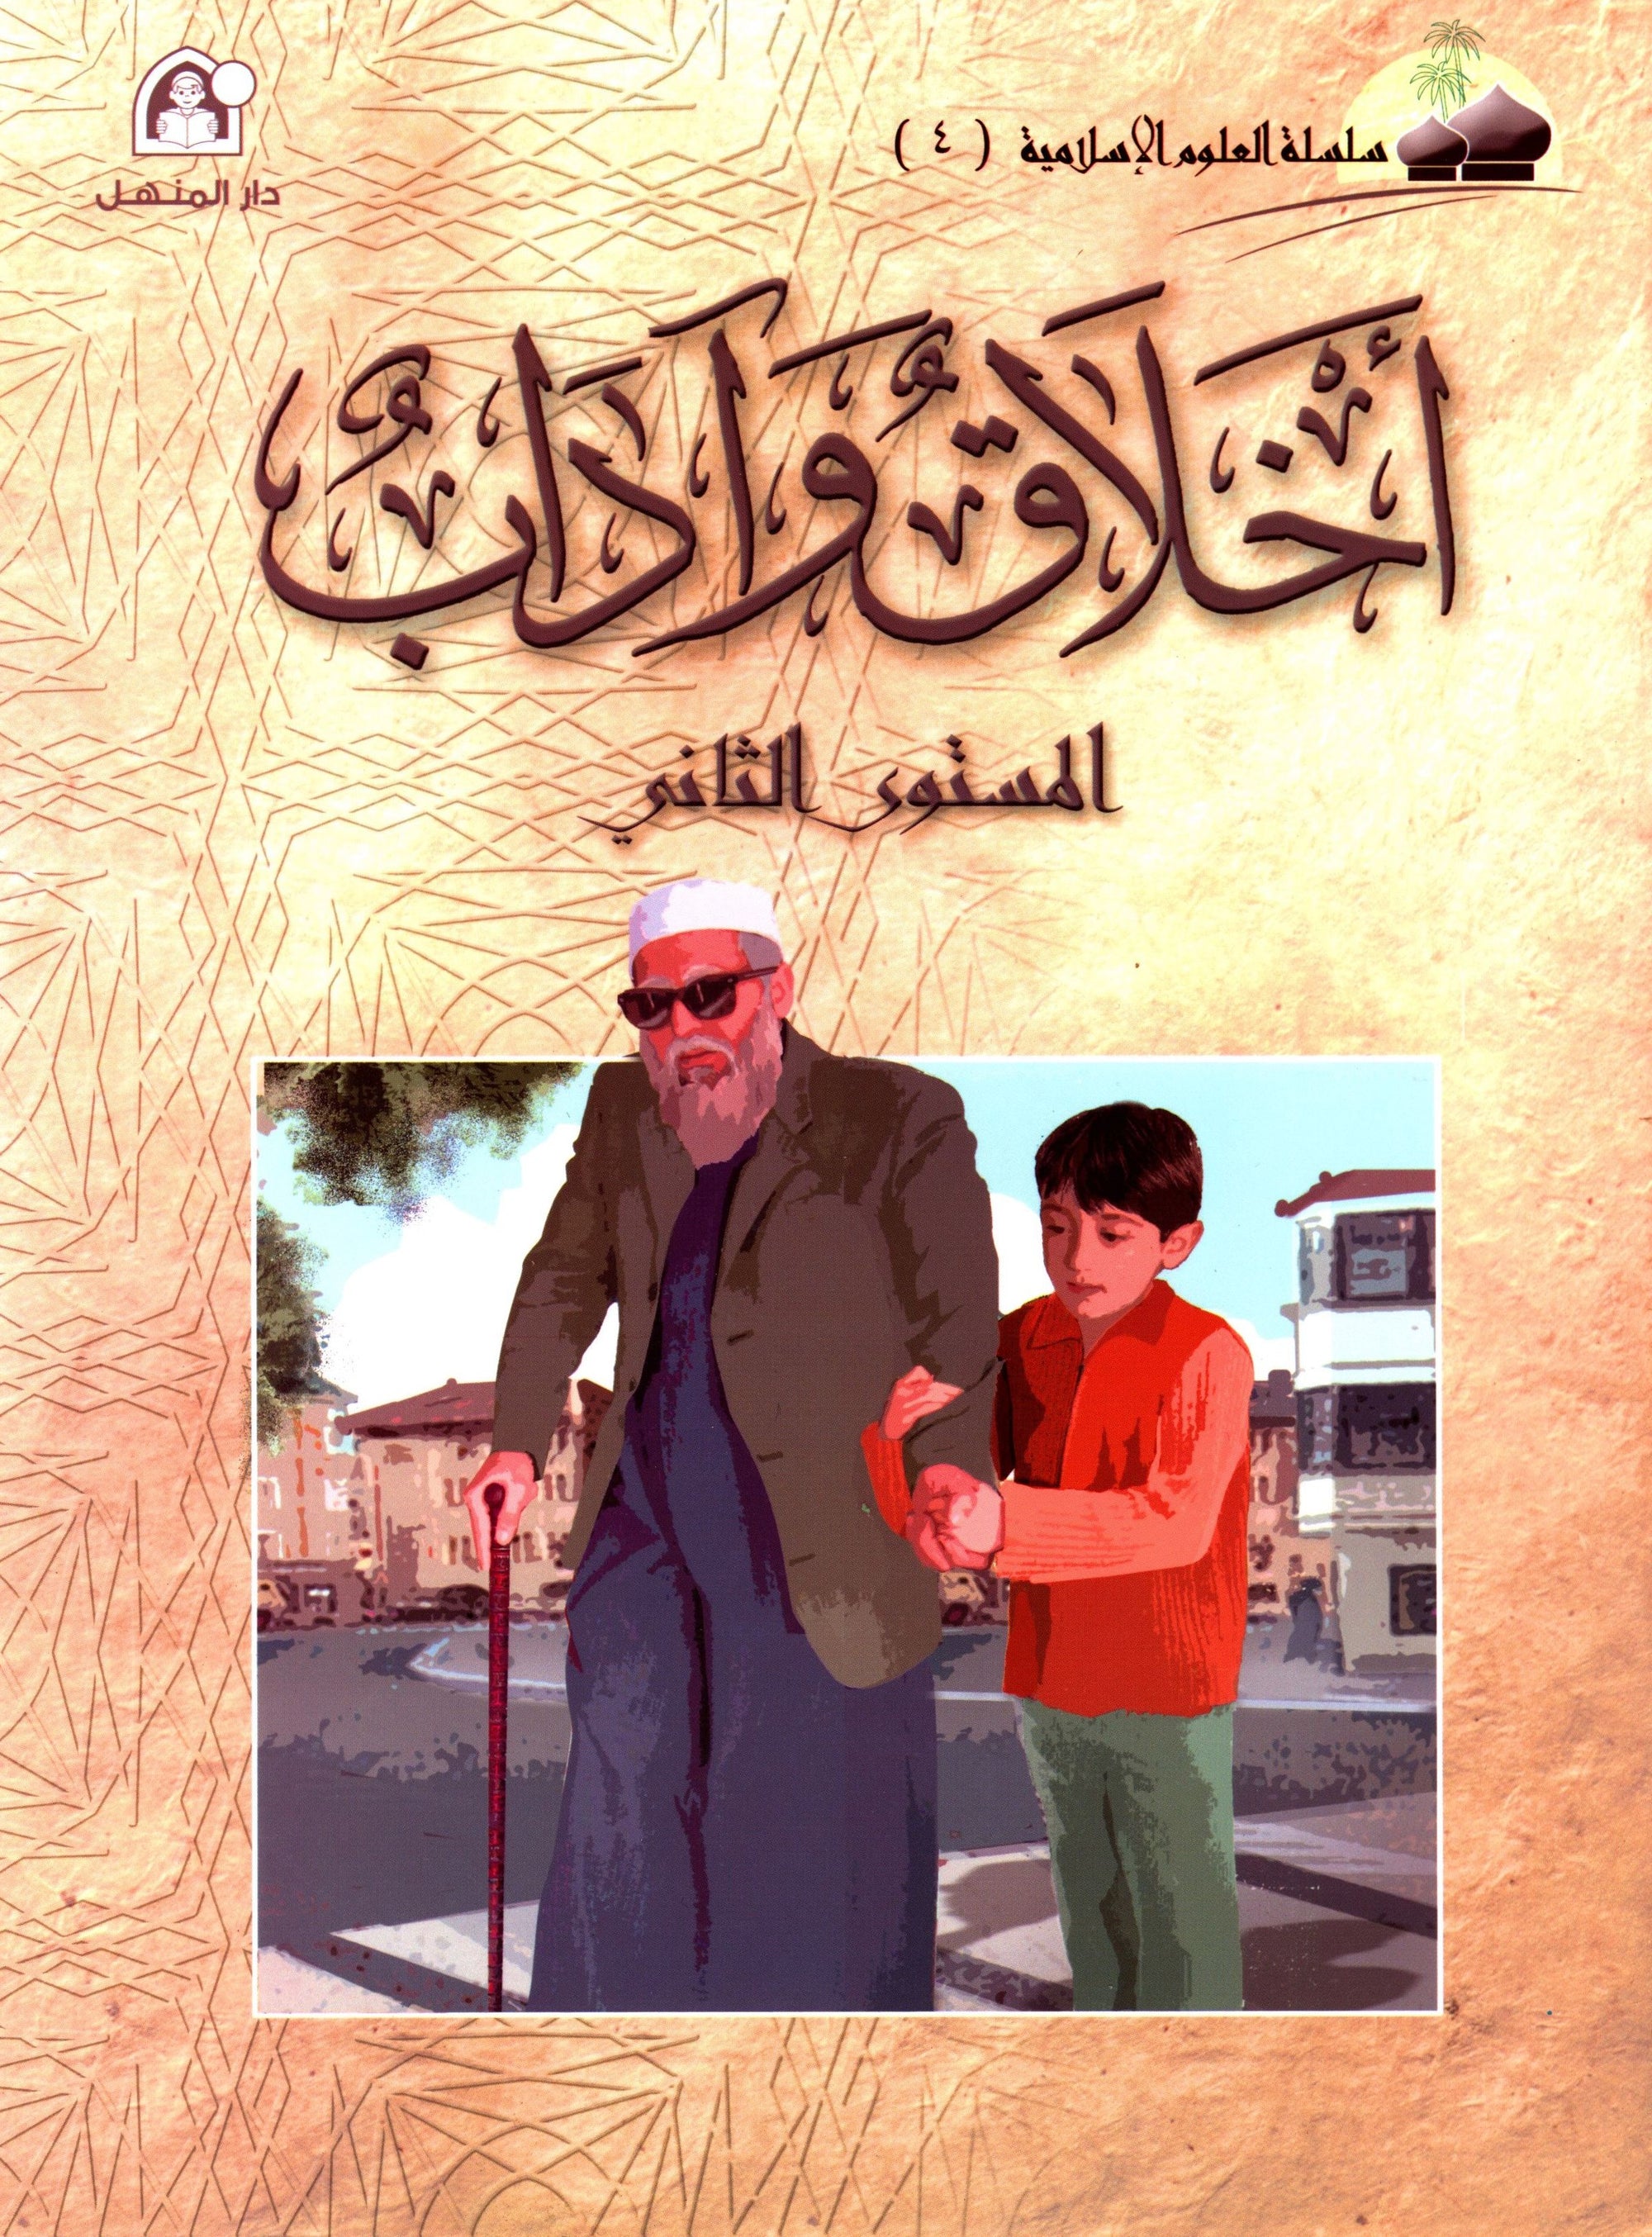 Islamic Knowledge Series - Morality and Ethics Book 4 Part 2 سلسلة العلوم الإسلامية أخلاق و اّداب